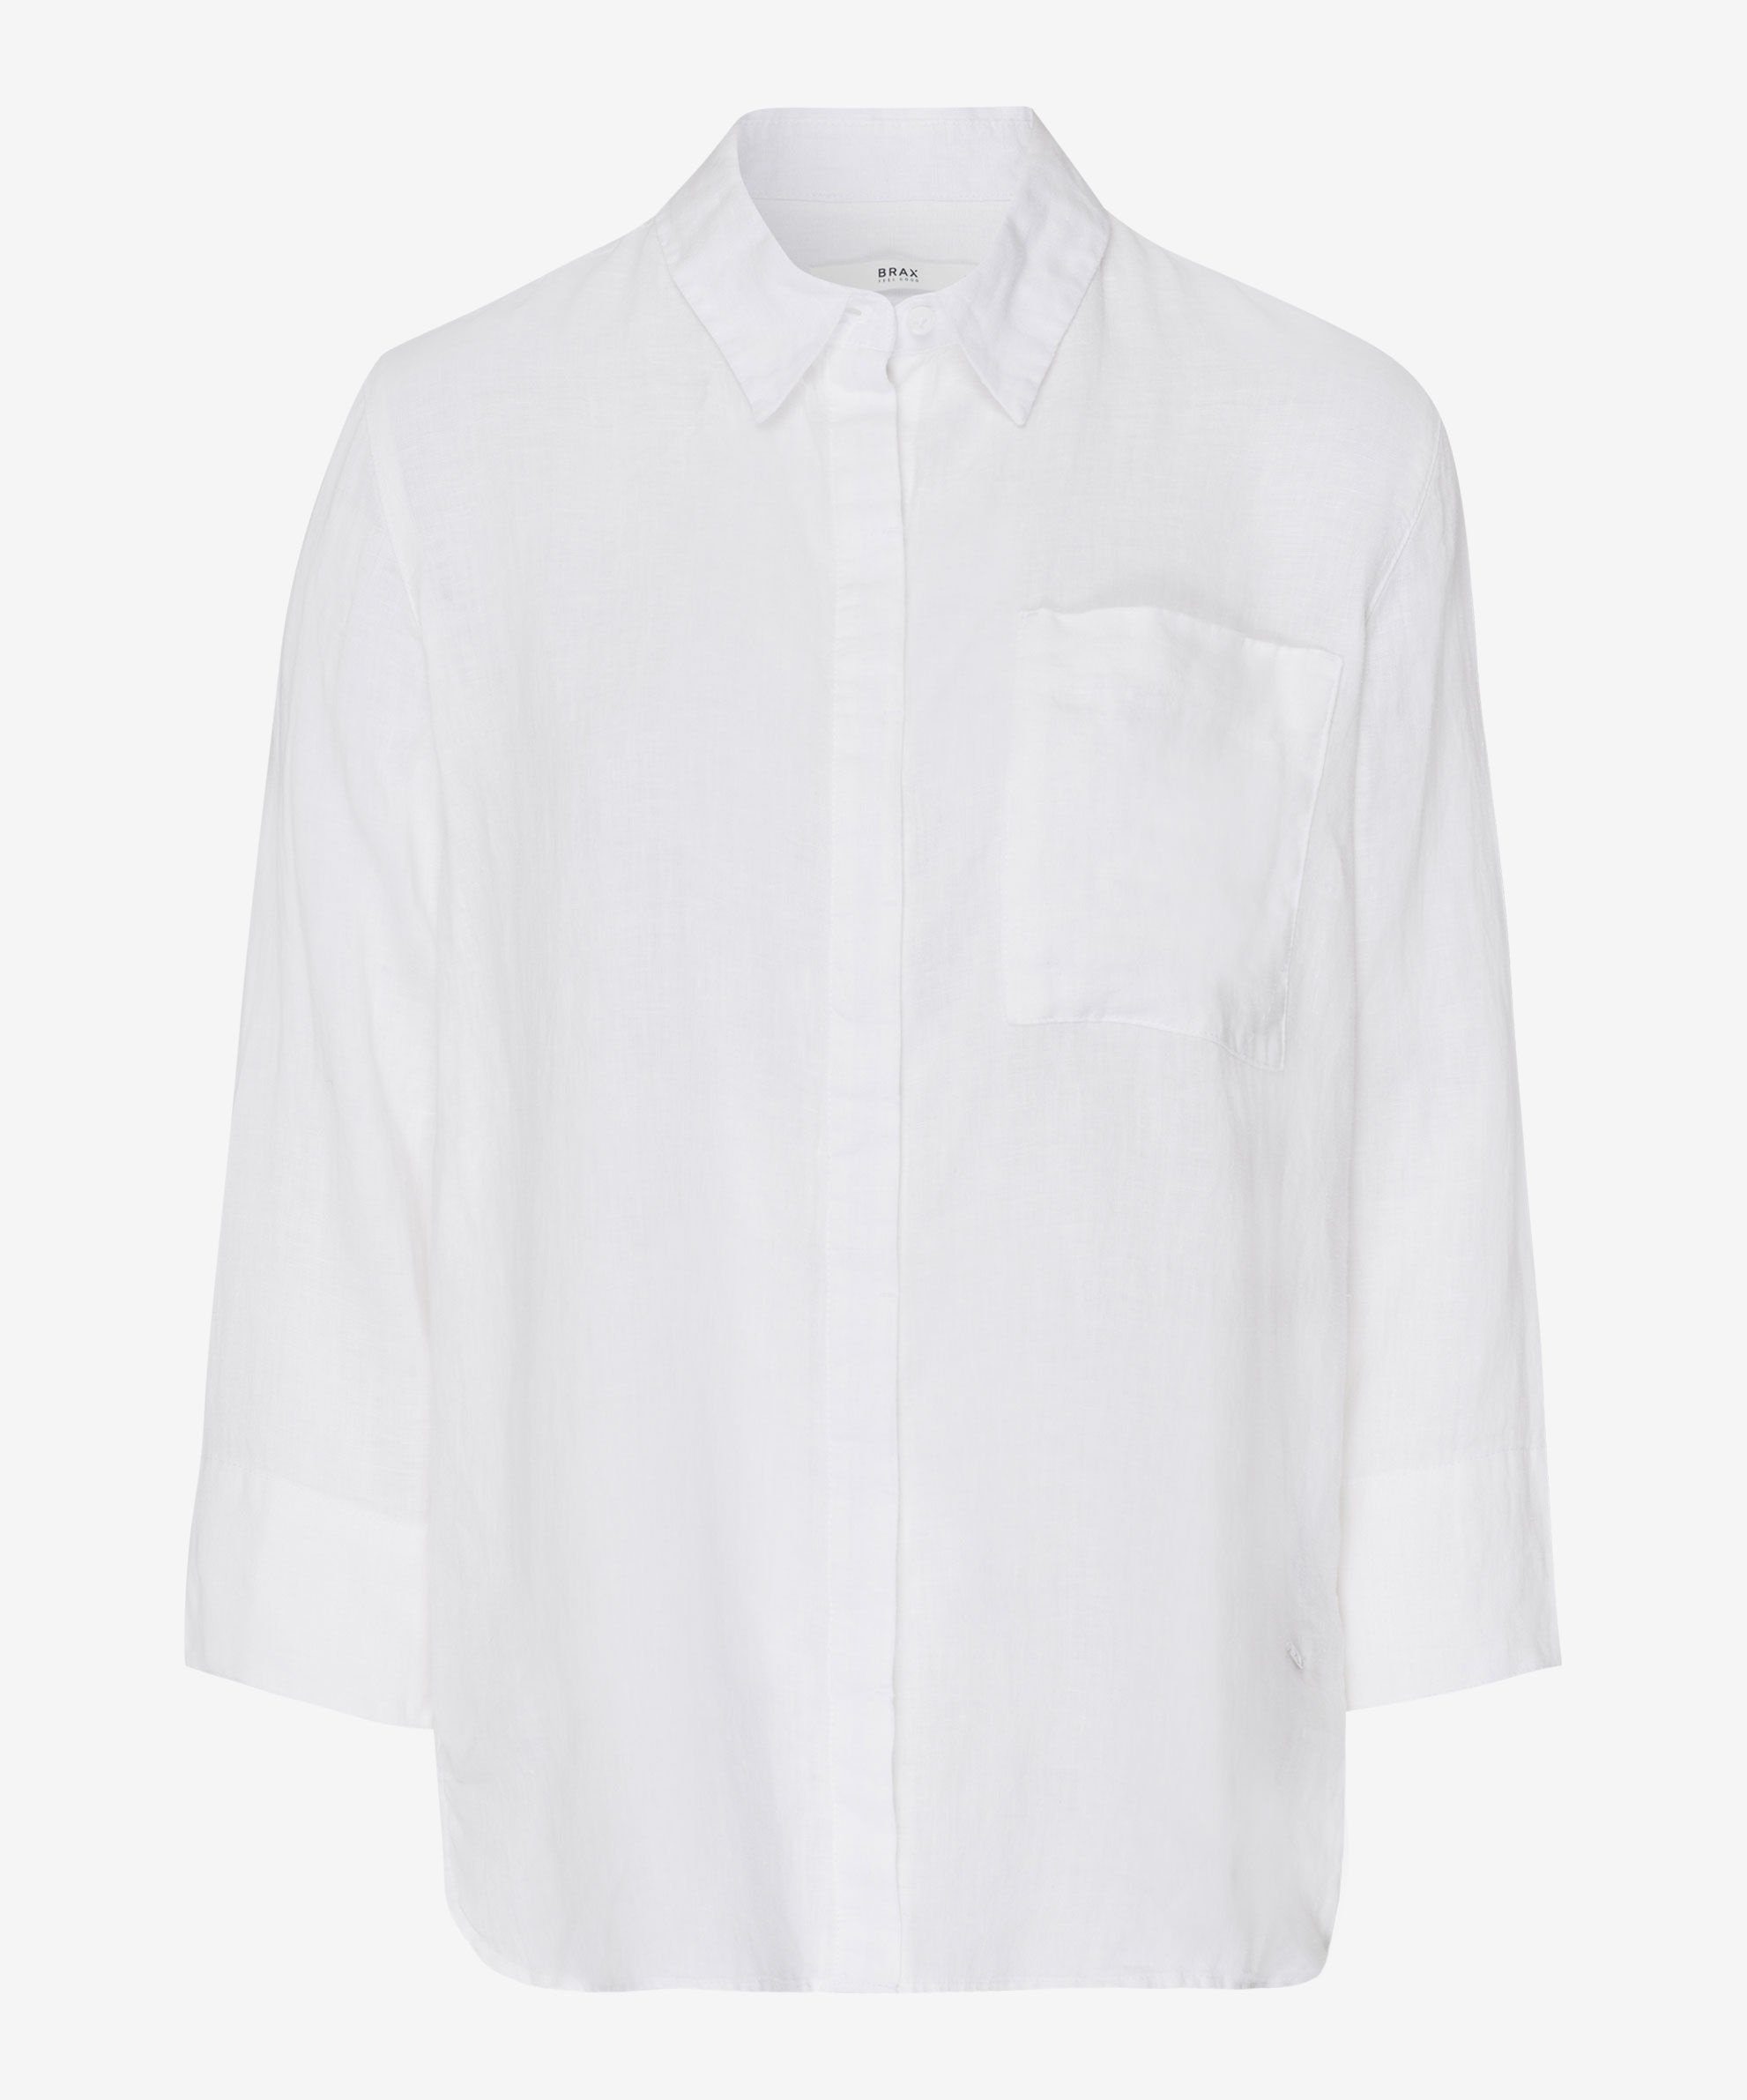 Brax Hemdbluse Bluse mit edlen Stylingdetails white